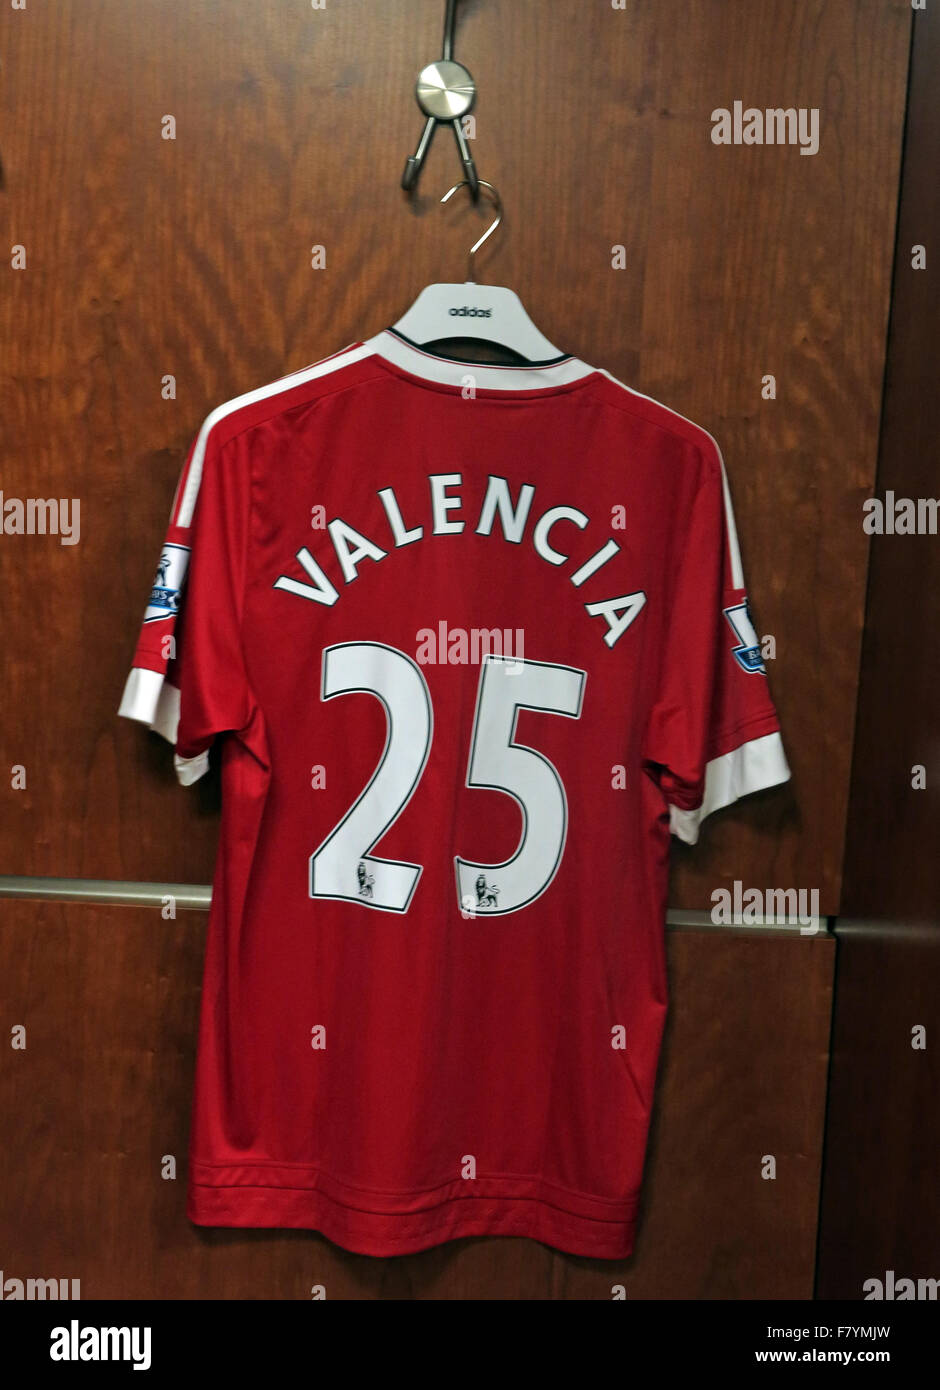 Antonio Valencia 25 shirt in MUFC dressing room, Old Trafford Stock Photo